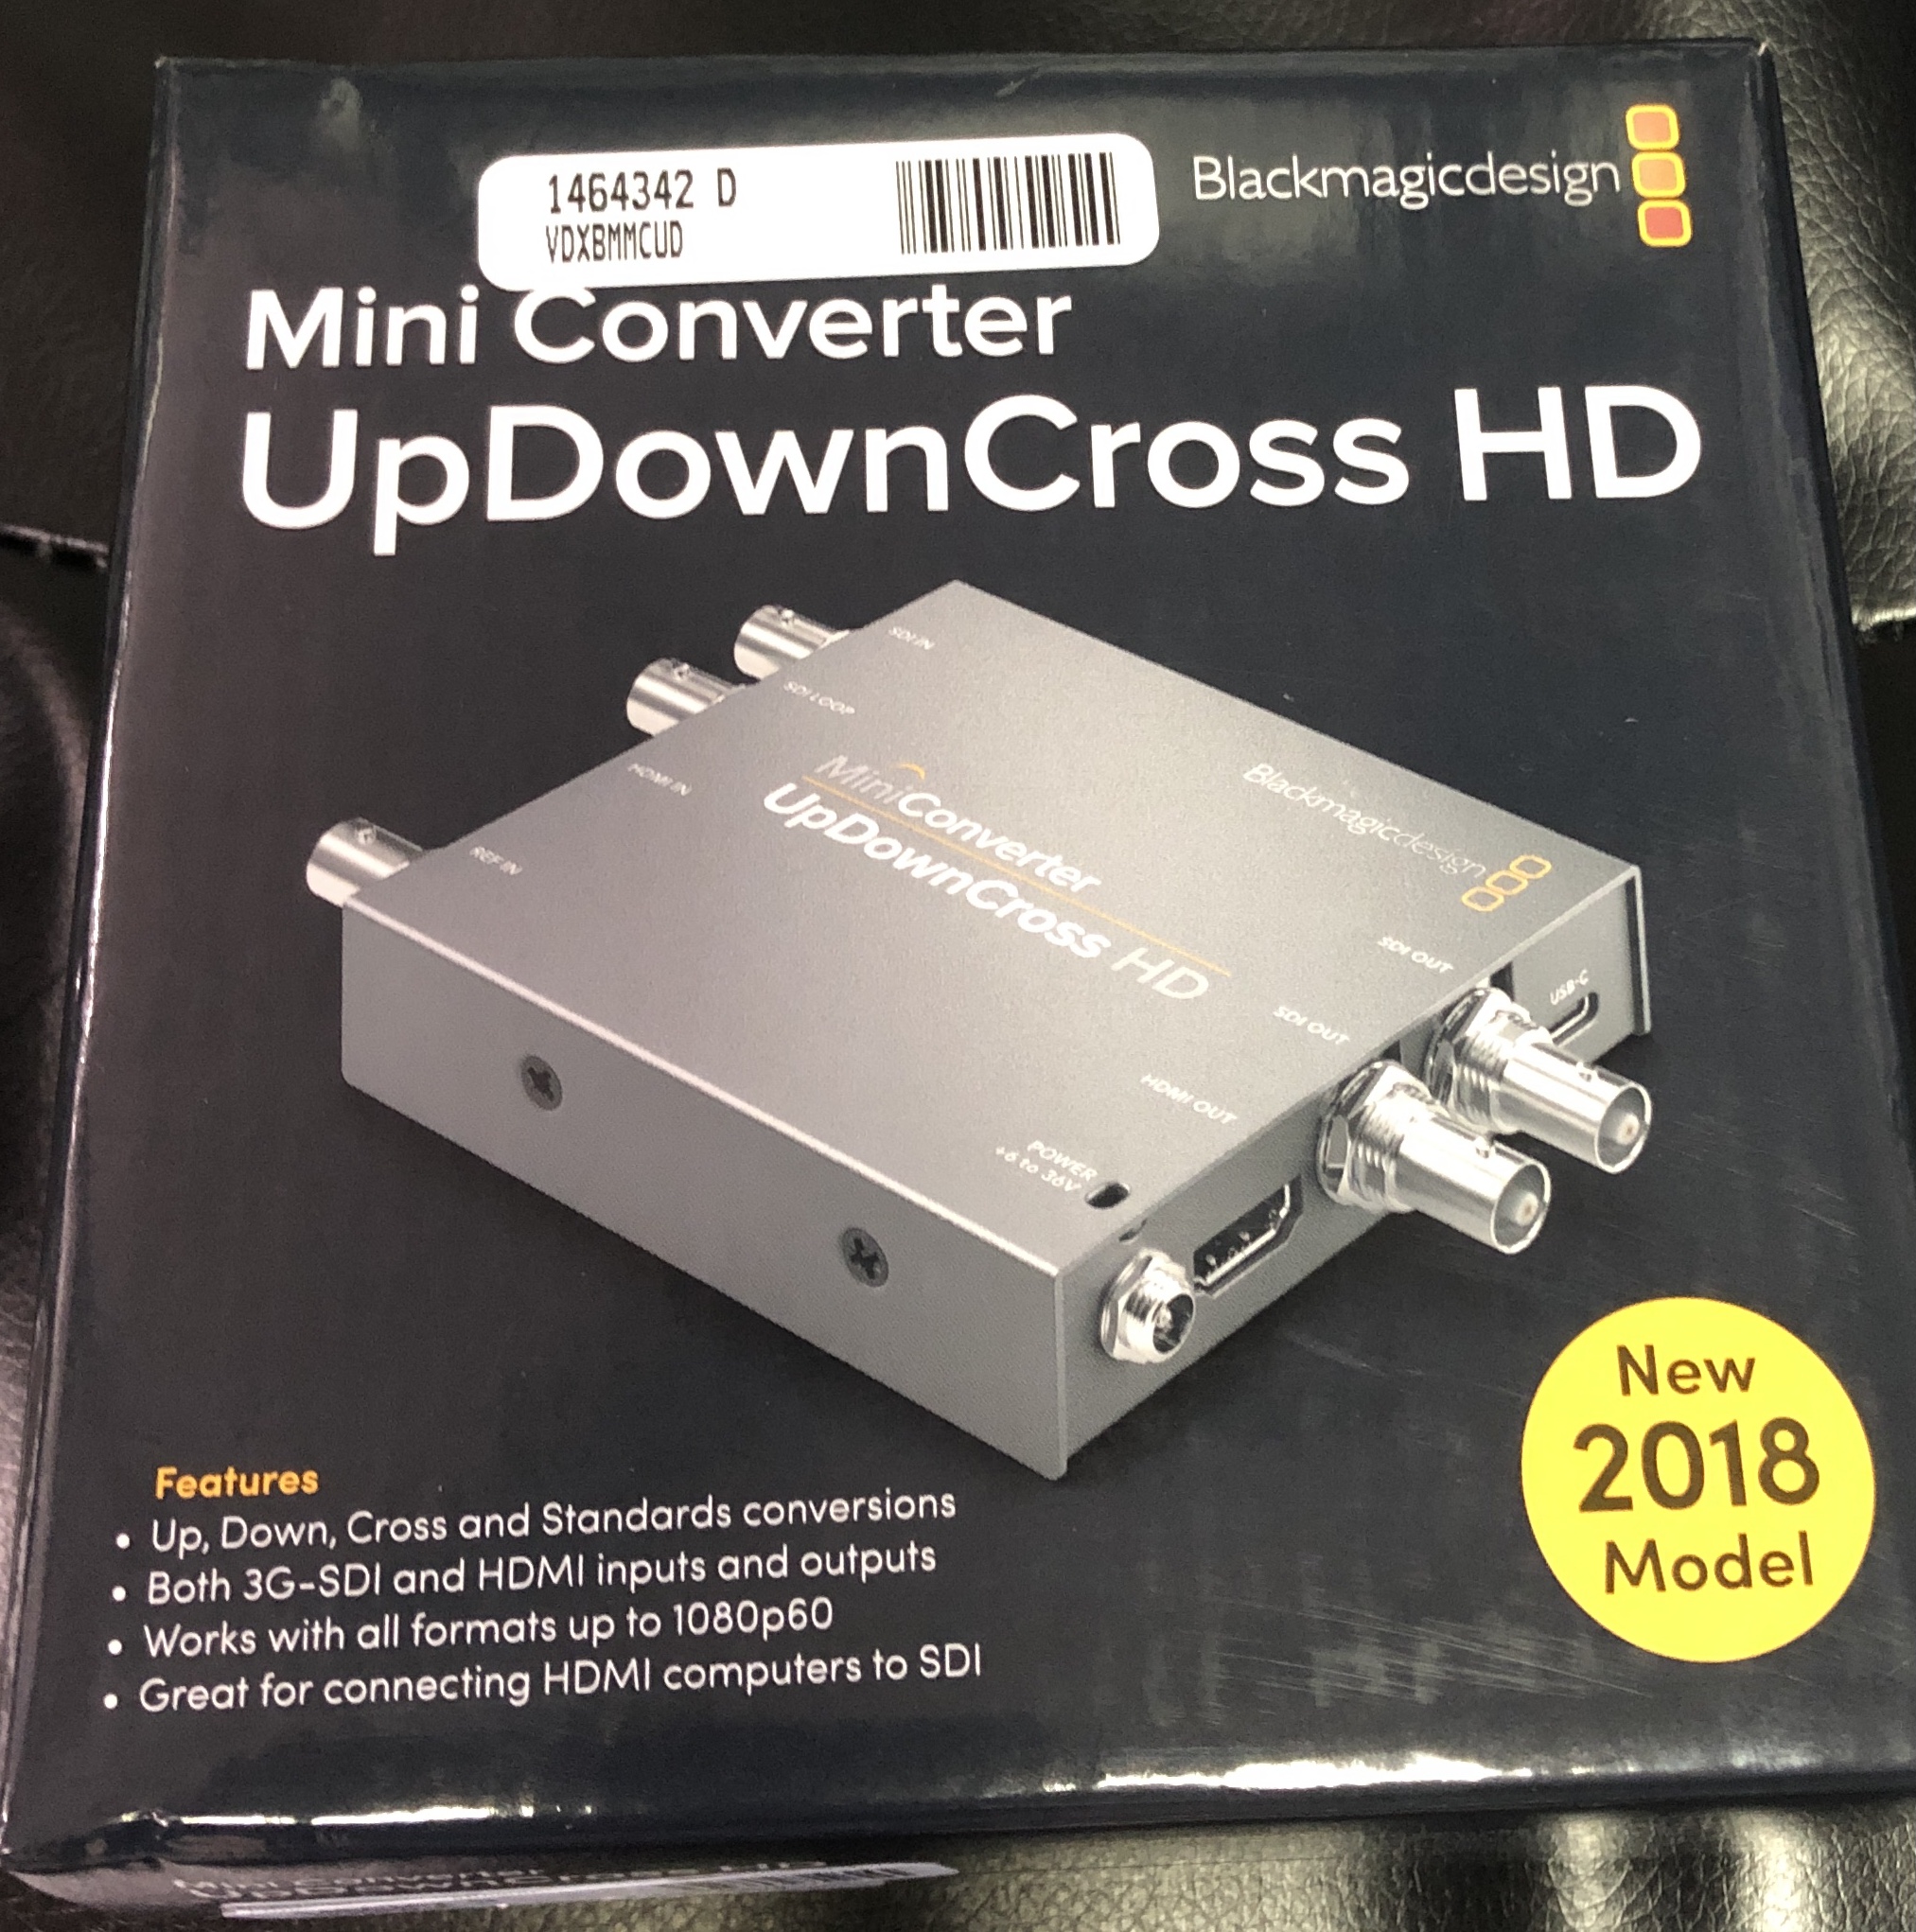 Updowncross HD BlackMagic Mini Converter